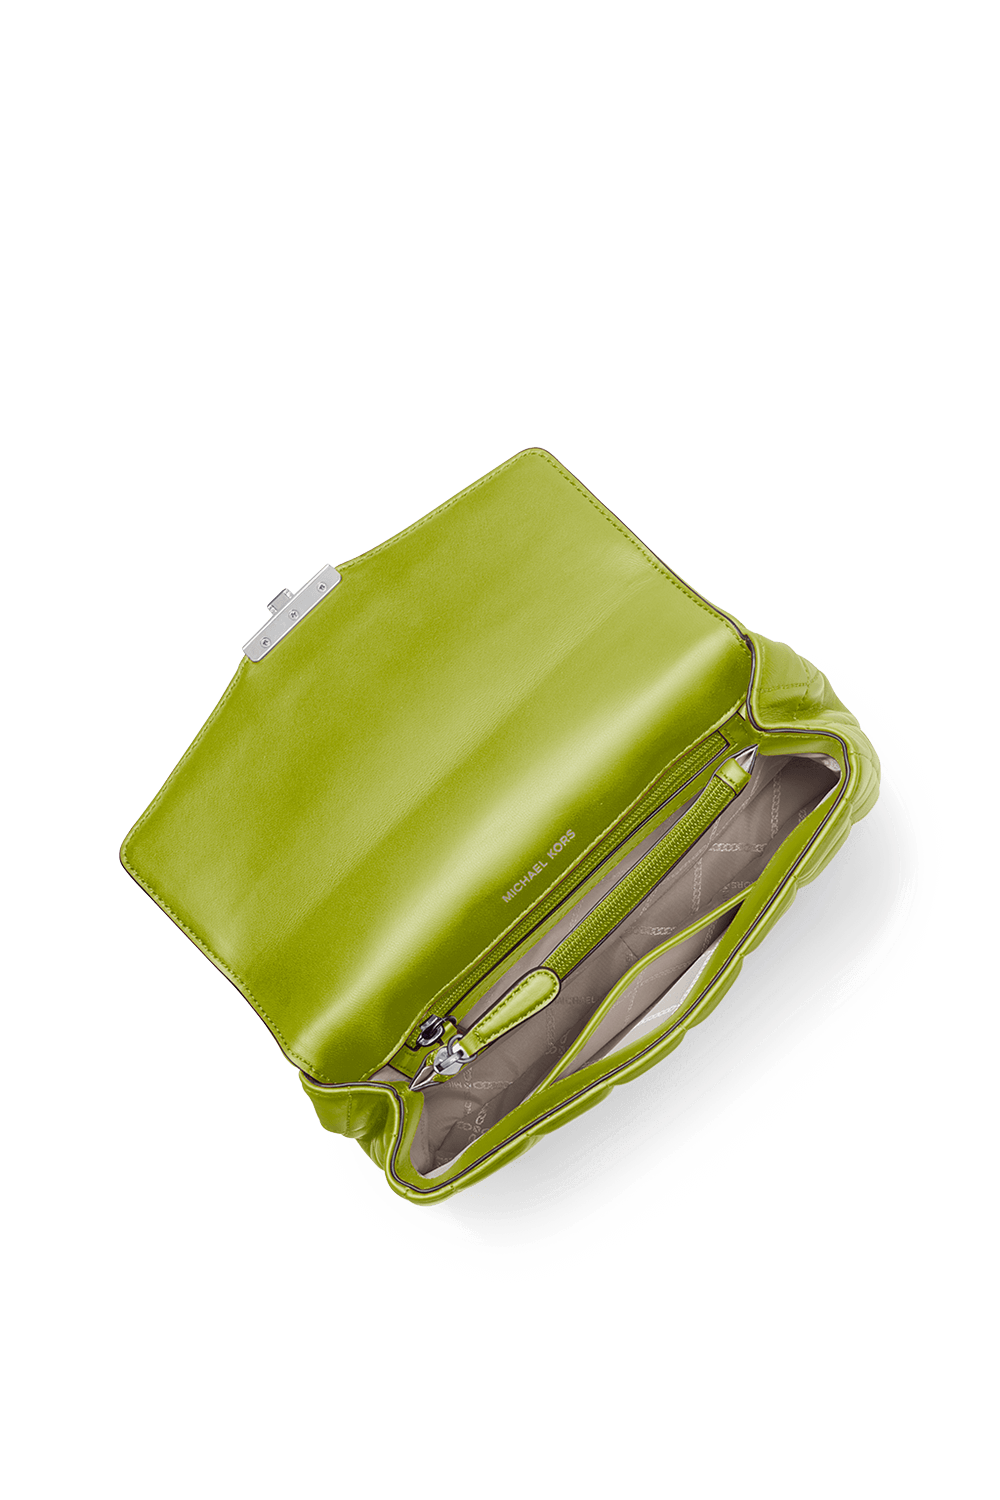 Soho LG Quilted Leather Shoulder Bag in Lime MICHAEL KORS